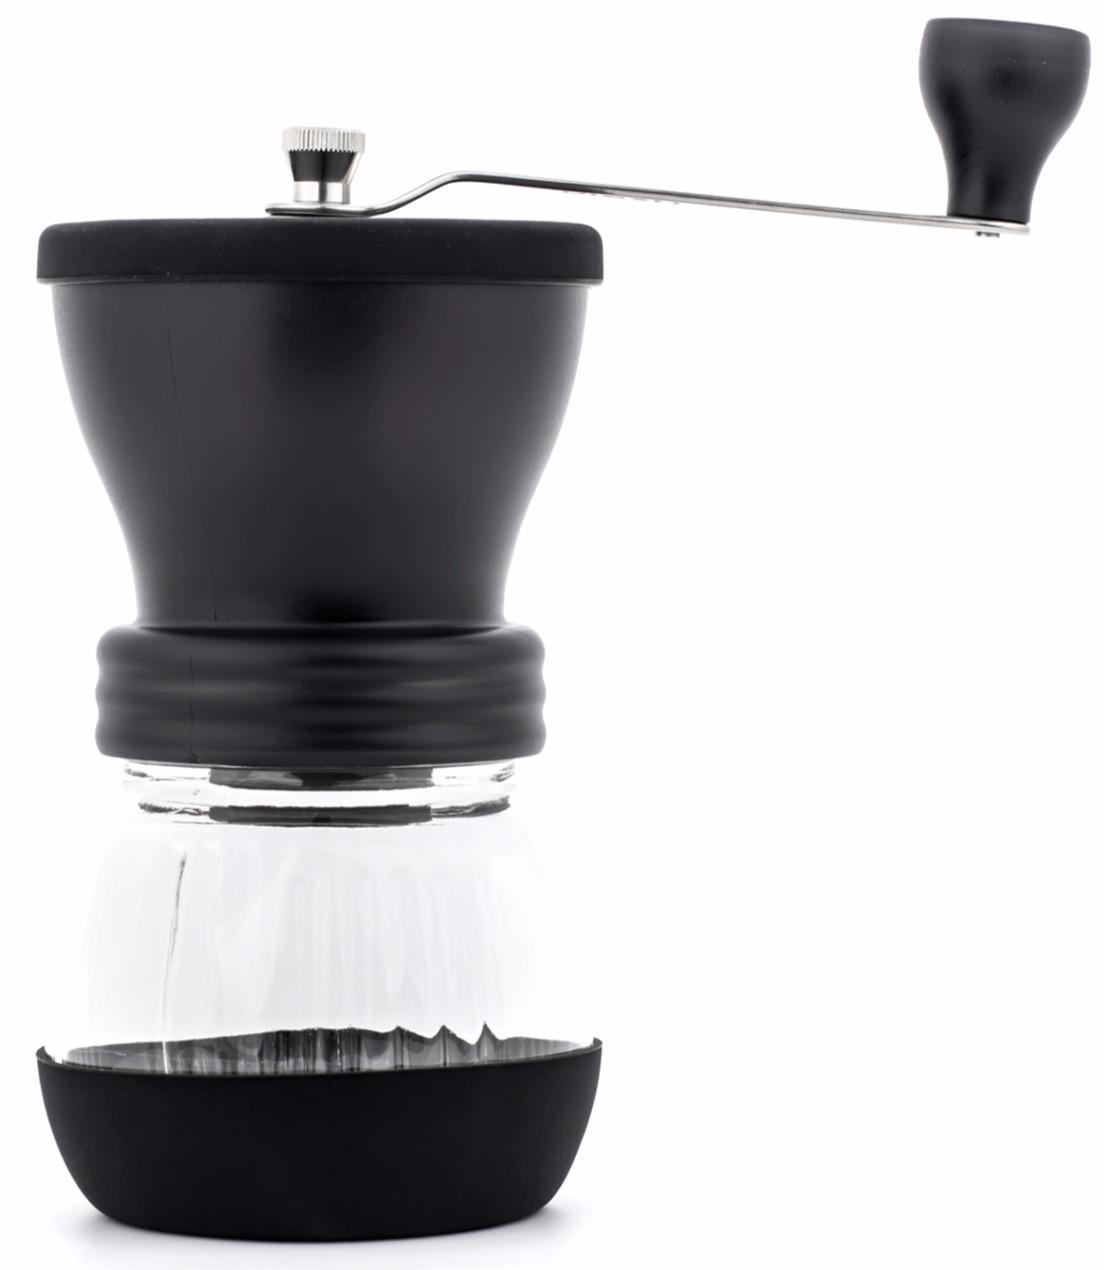 HARIO Skerton PLUS – manuell kaffekvarn